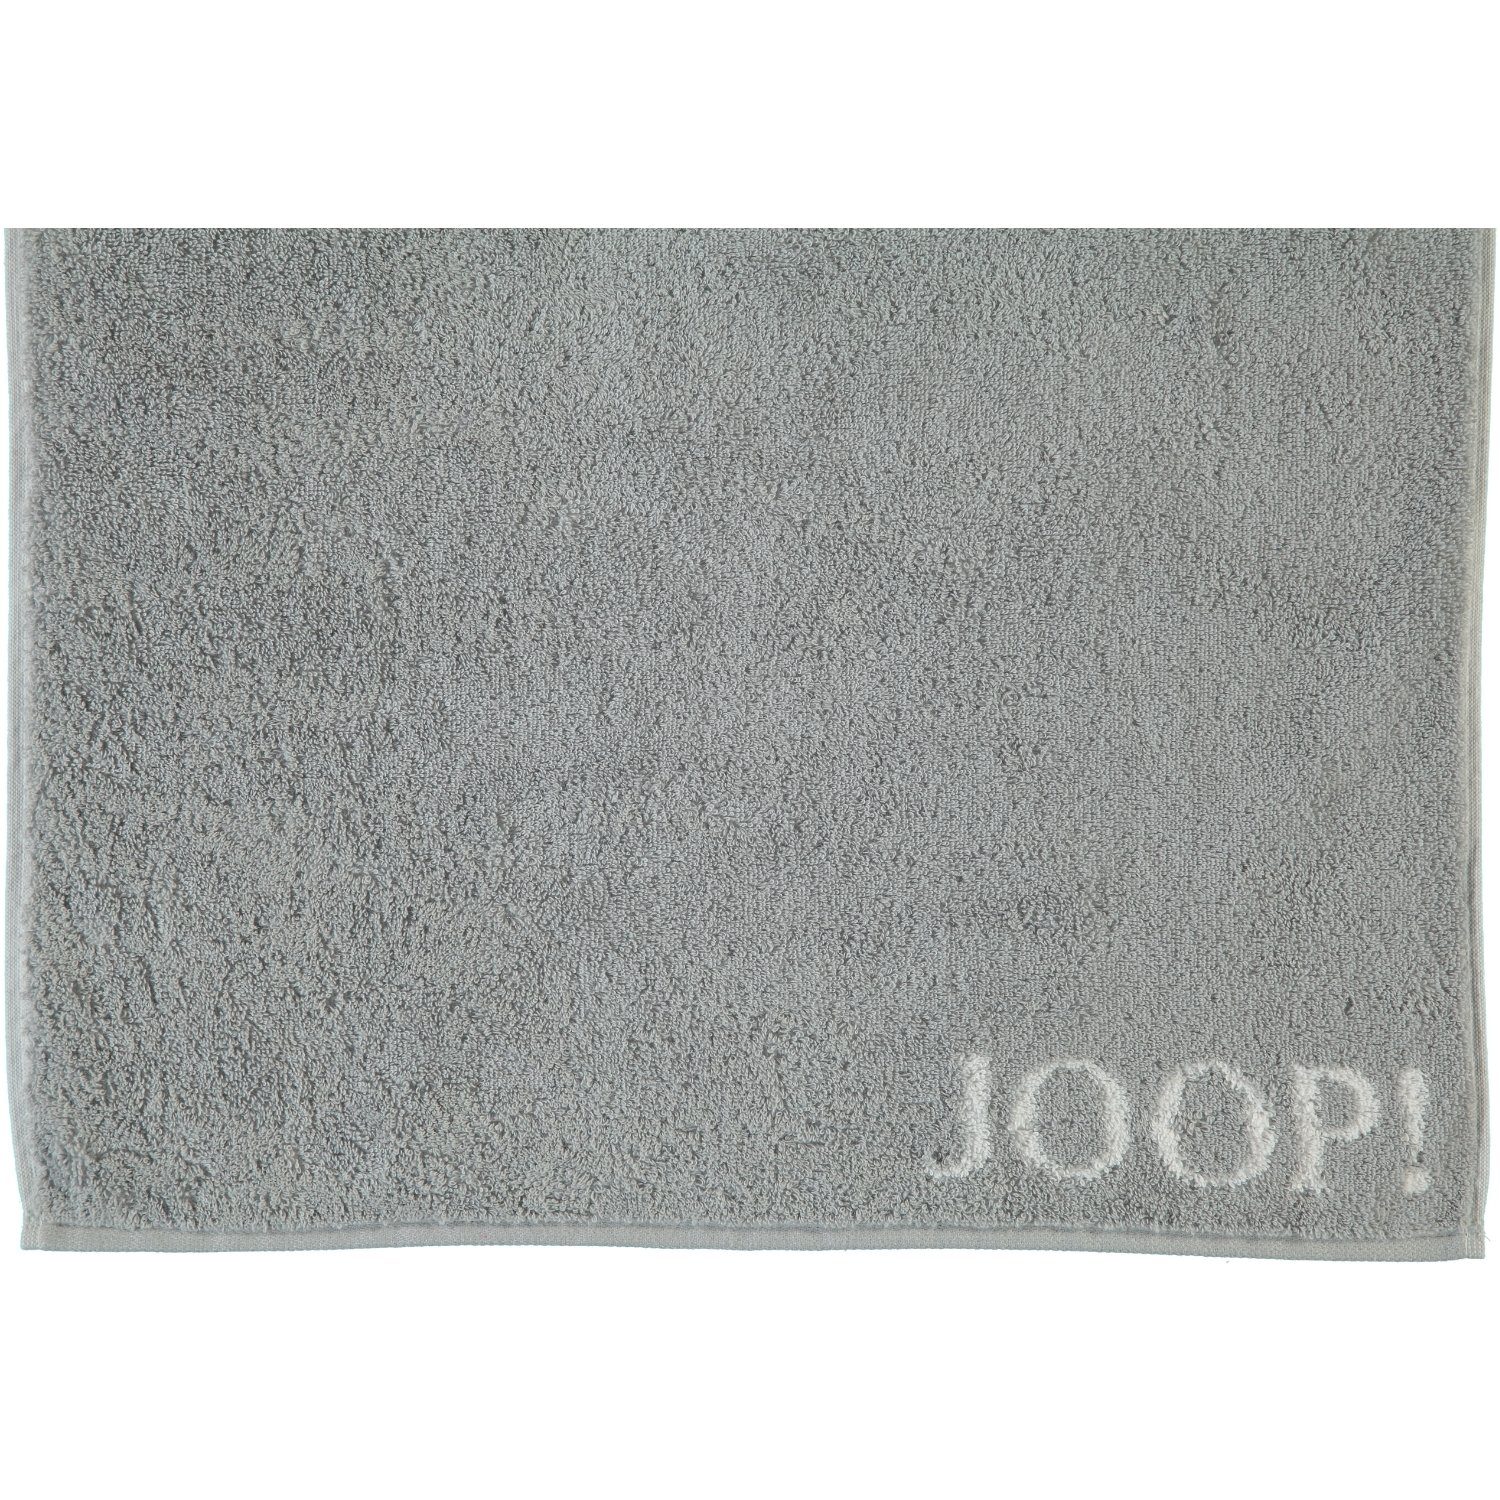 Classic Handtücher Baumwolle Doubleface silber 1600, - 100% Joop! 76